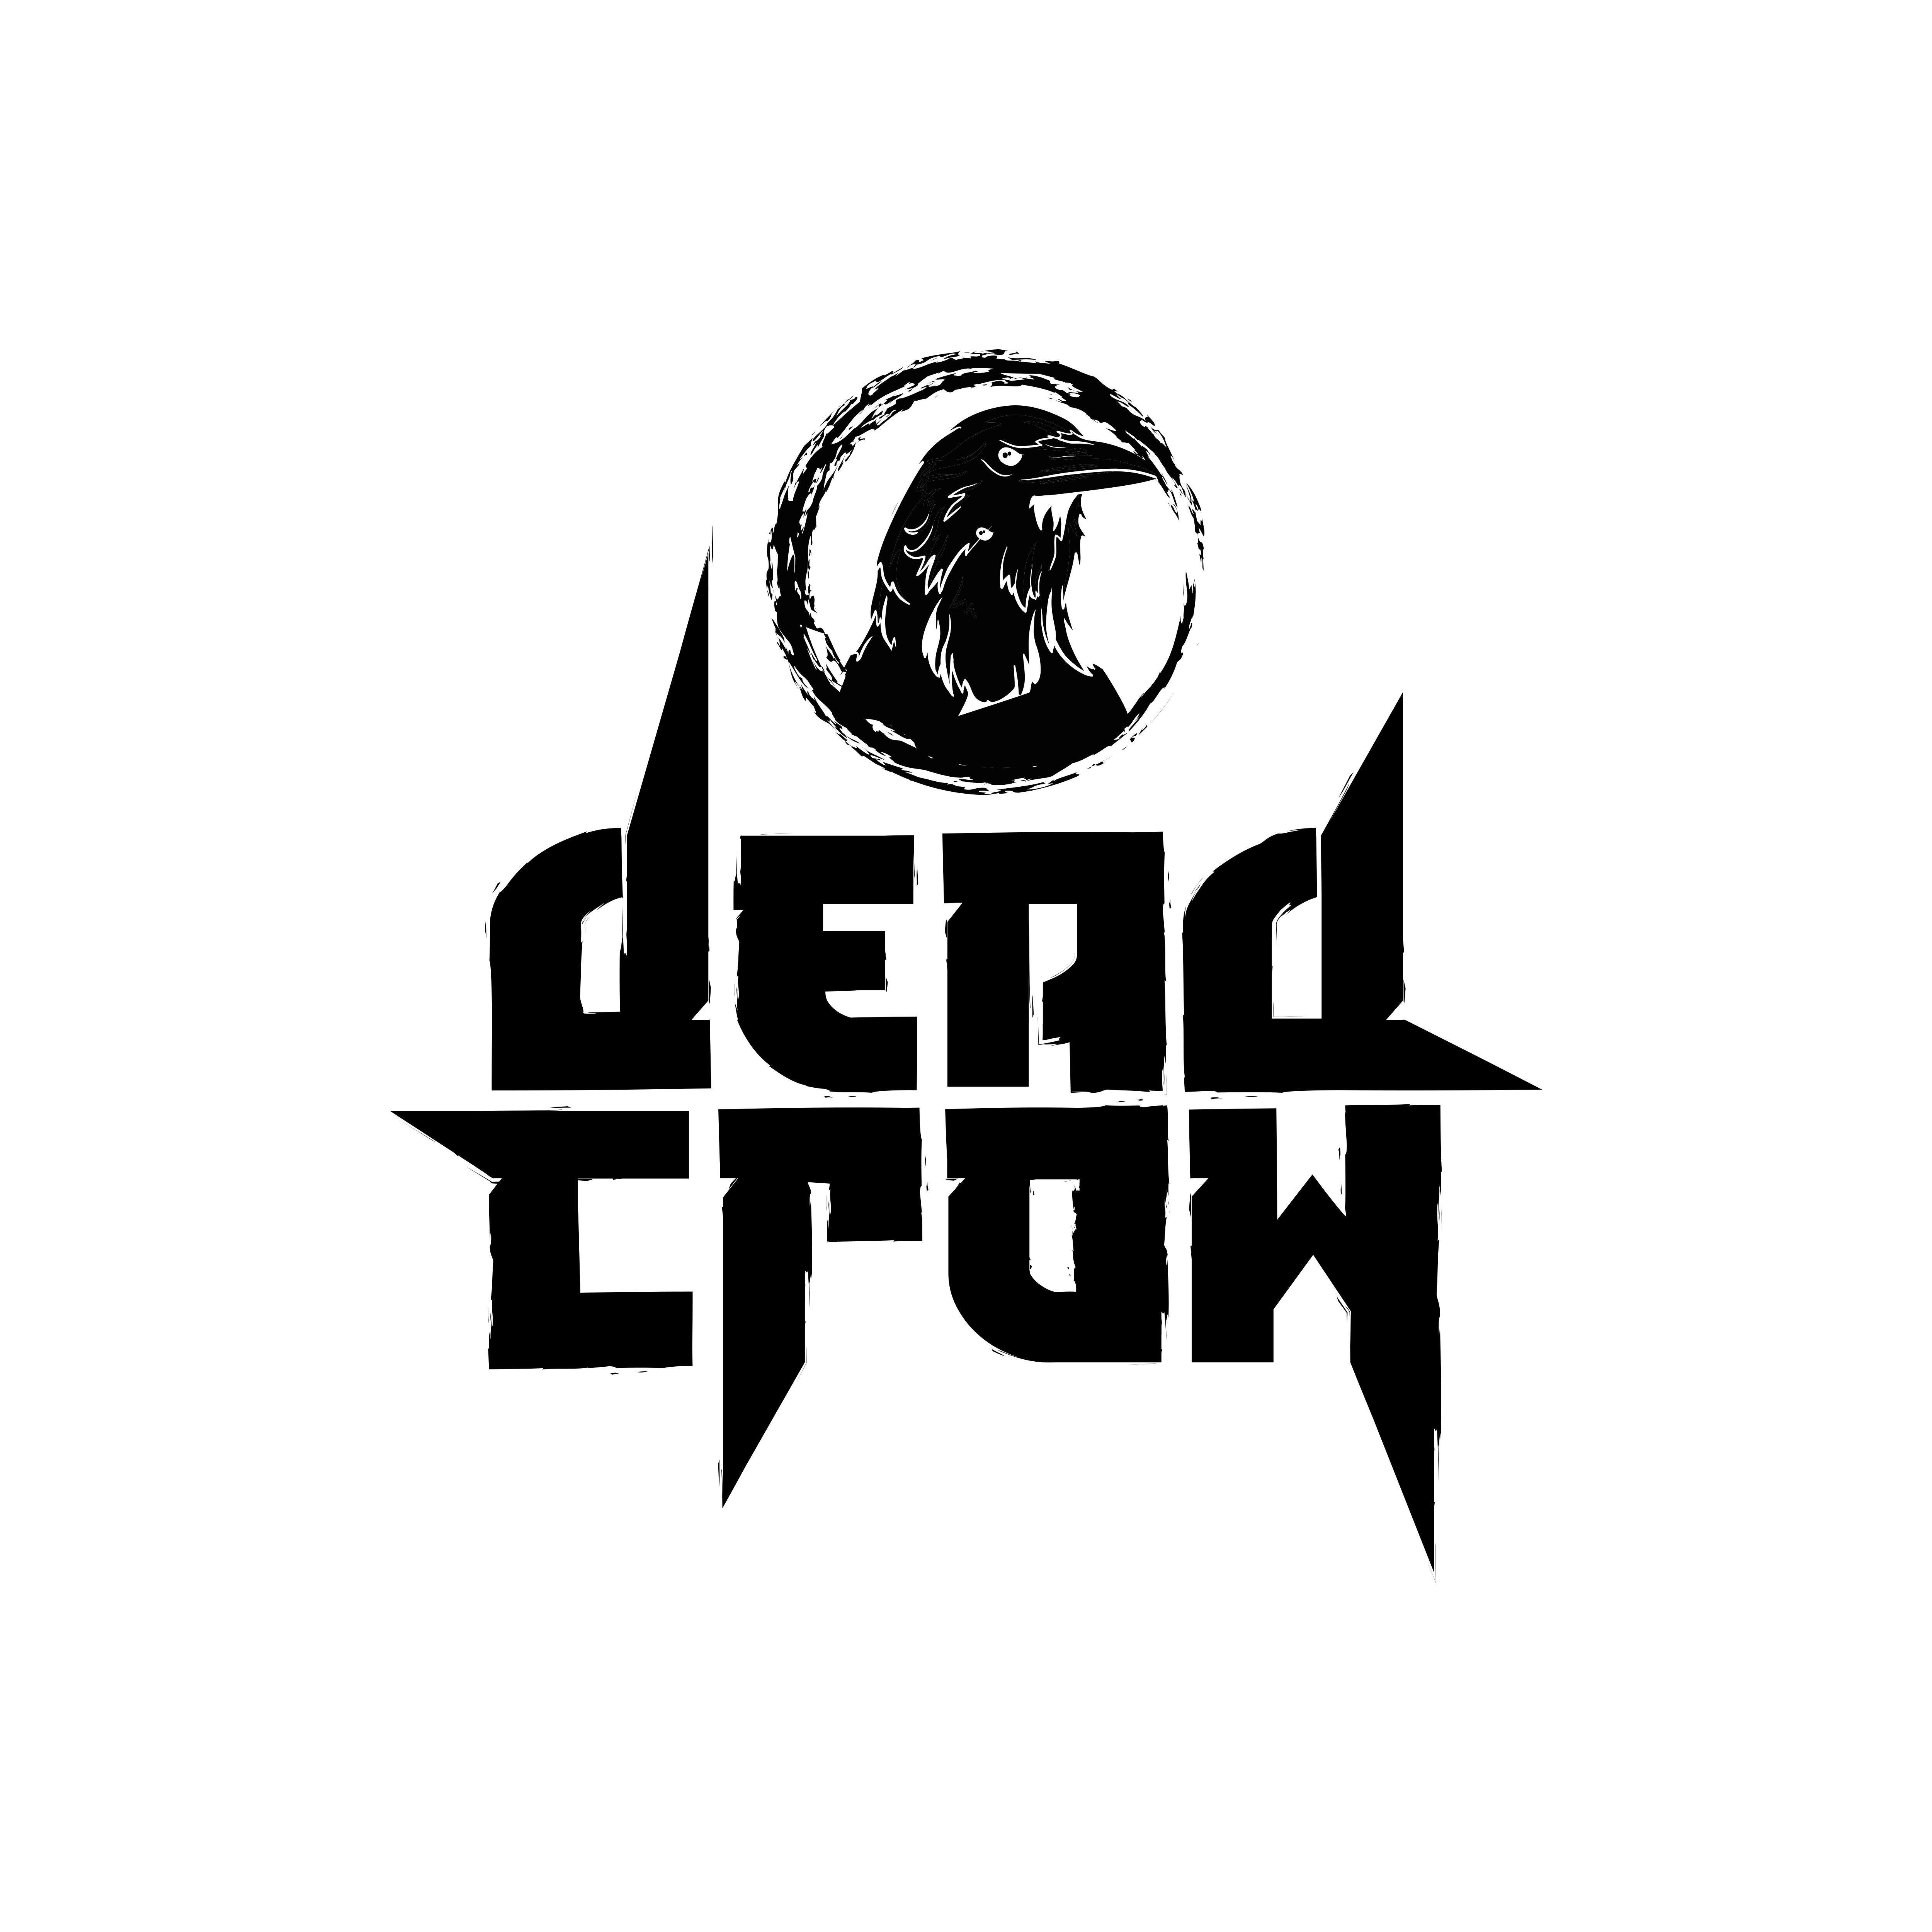 Beatz Logo - Dead Crow / Flat #dead #crow #beatz #logo #sinedgfx